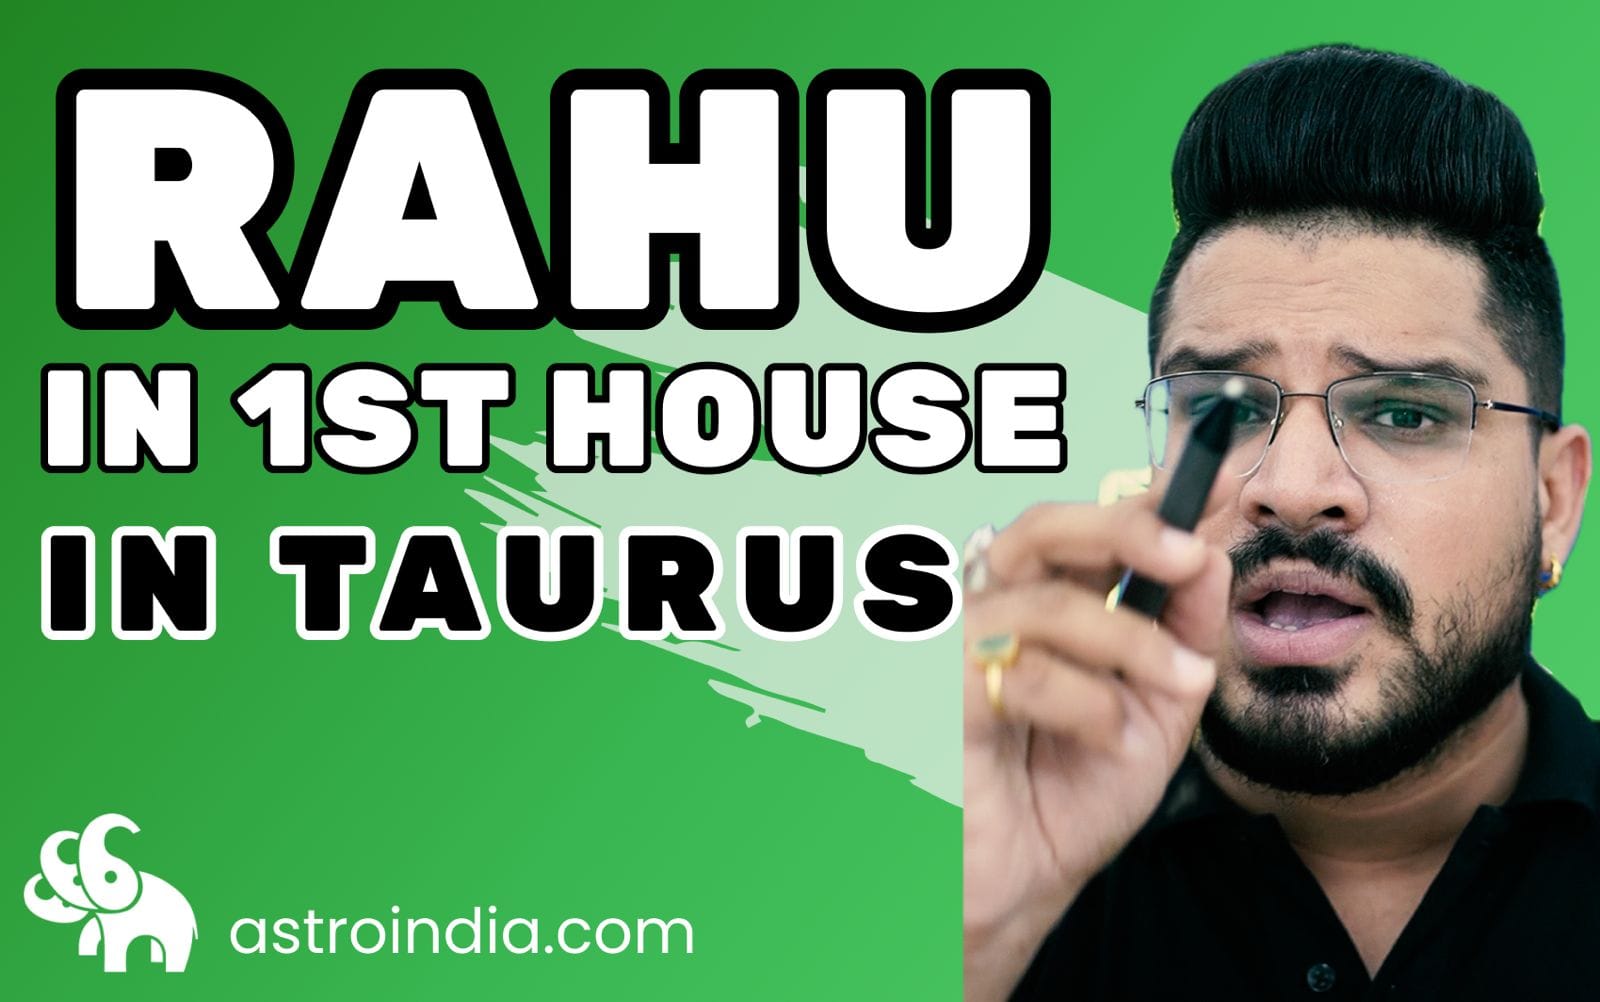 Rahu in 1st House in Taurus